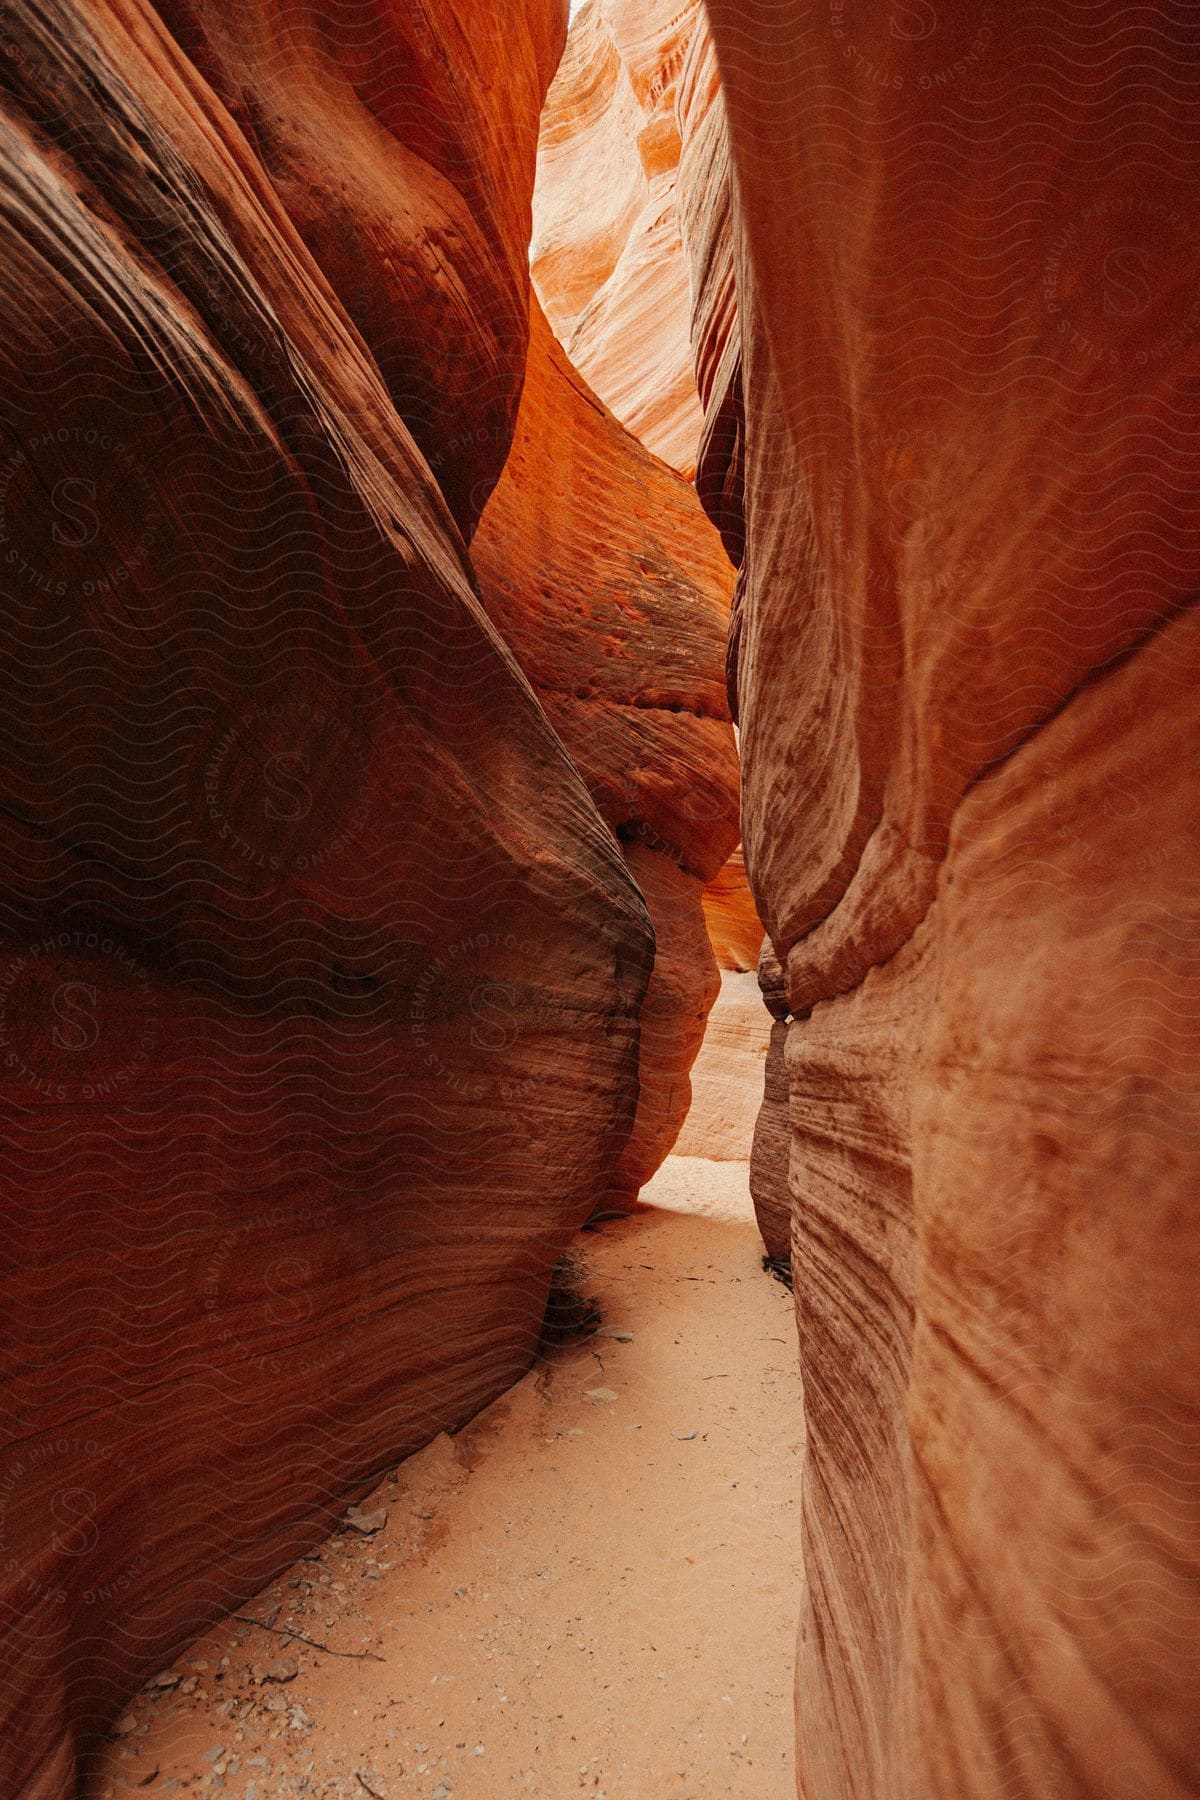 Orange sandstone walls of antelope canyon in arizona an outdoor natural landscape landmark